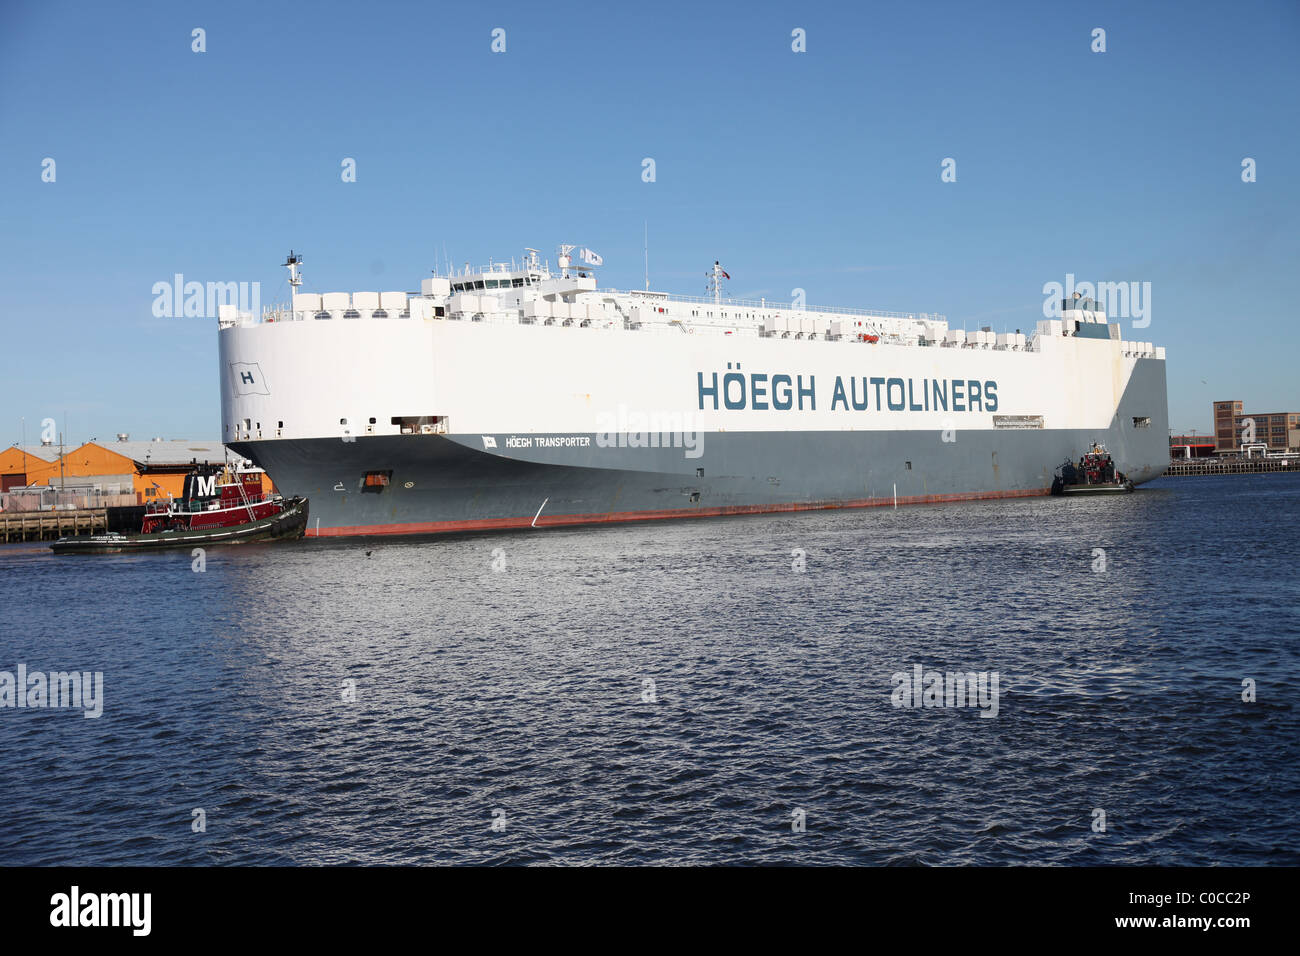 Car carrier ship -Fotos und -Bildmaterial in hoher Auflösung – Alamy